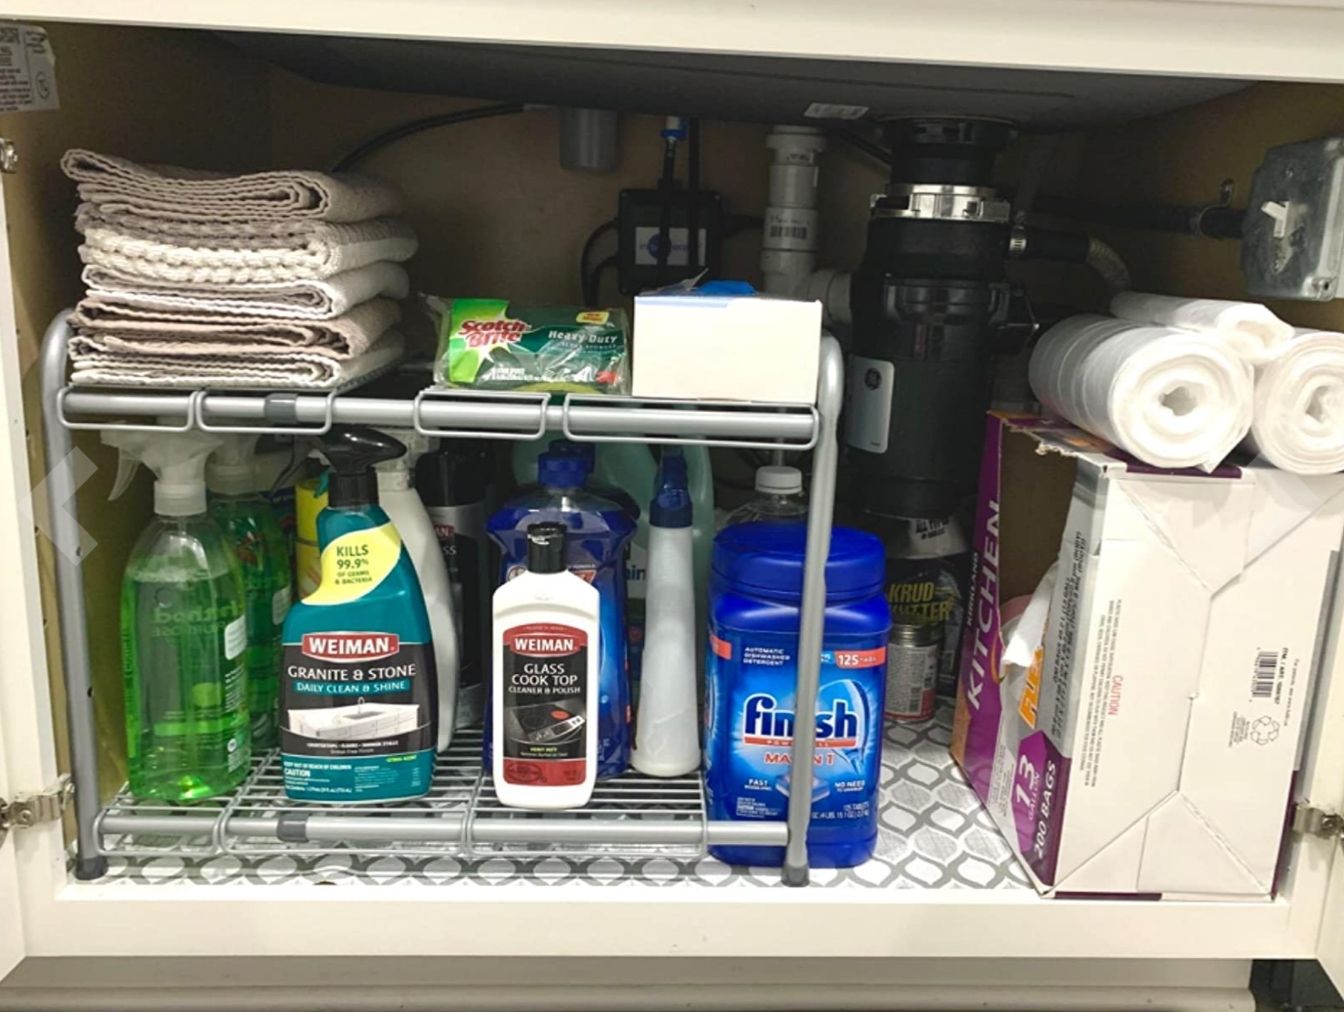 https://www.themodernmocha.com/wp-content/uploads/2021/02/Under-kitchen-sink-organizer-expandable-shelf.jpg